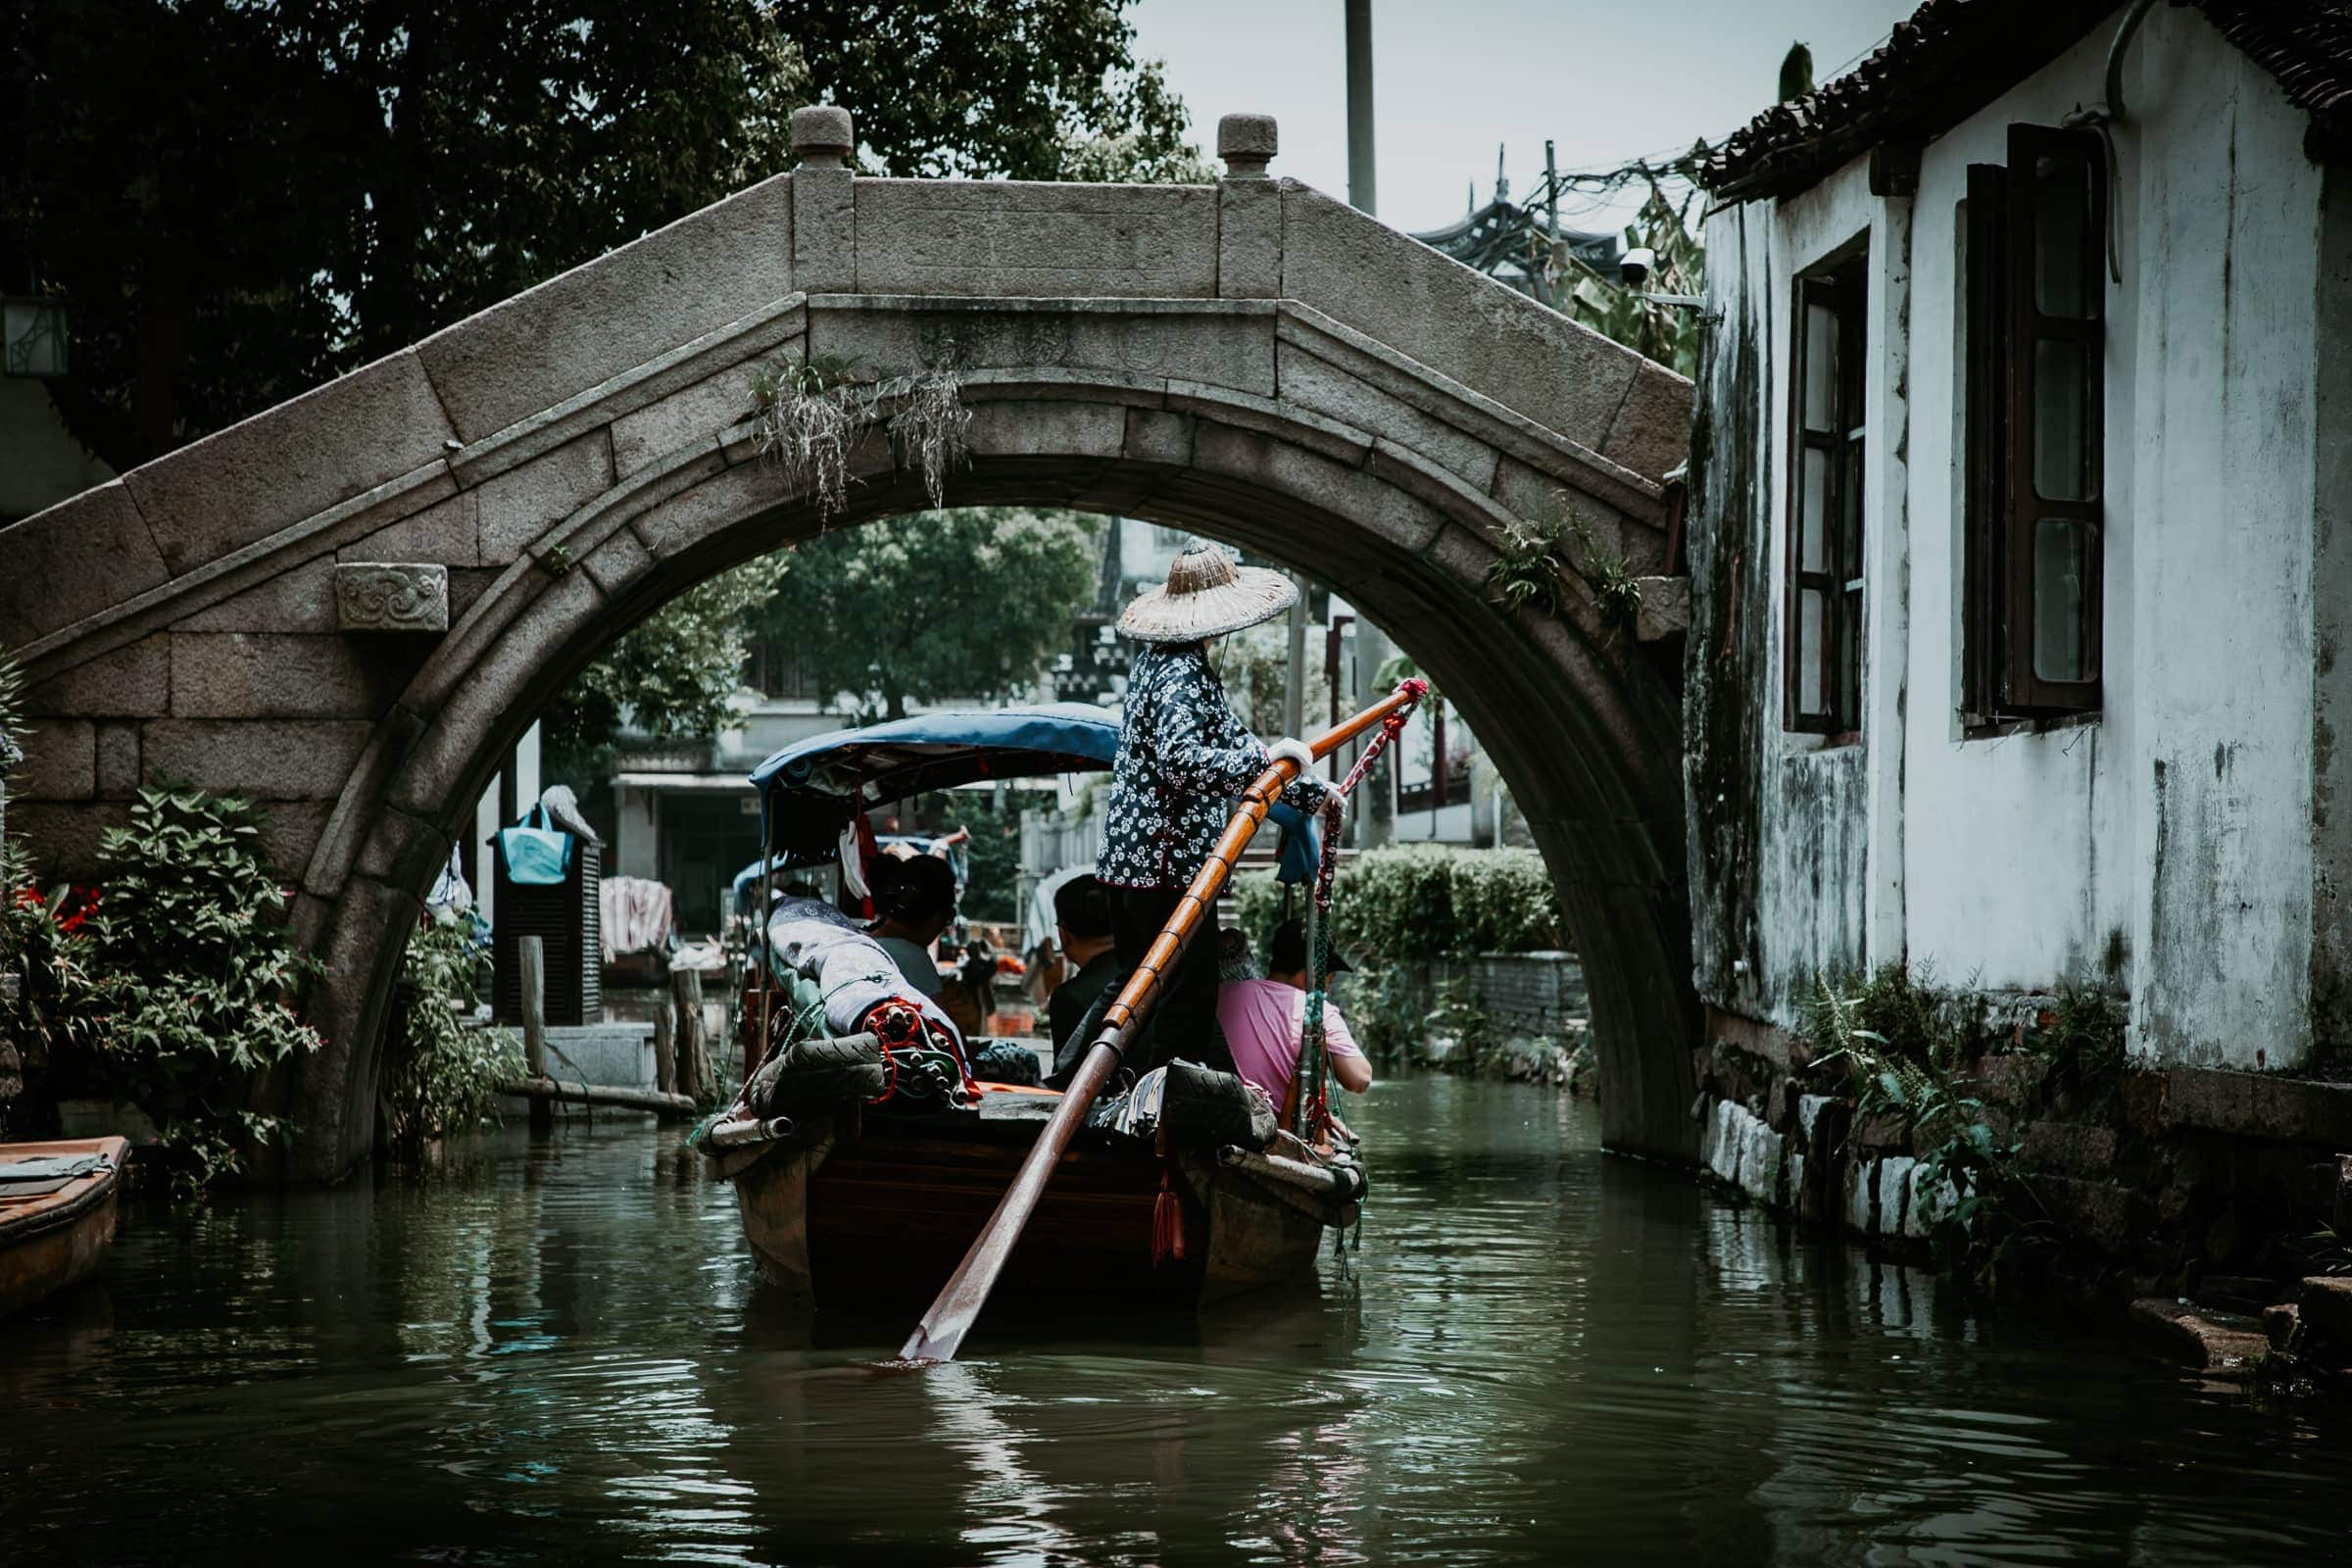 Zhouzhuang China Bootsfahrt auf Kanälen unter Brücken